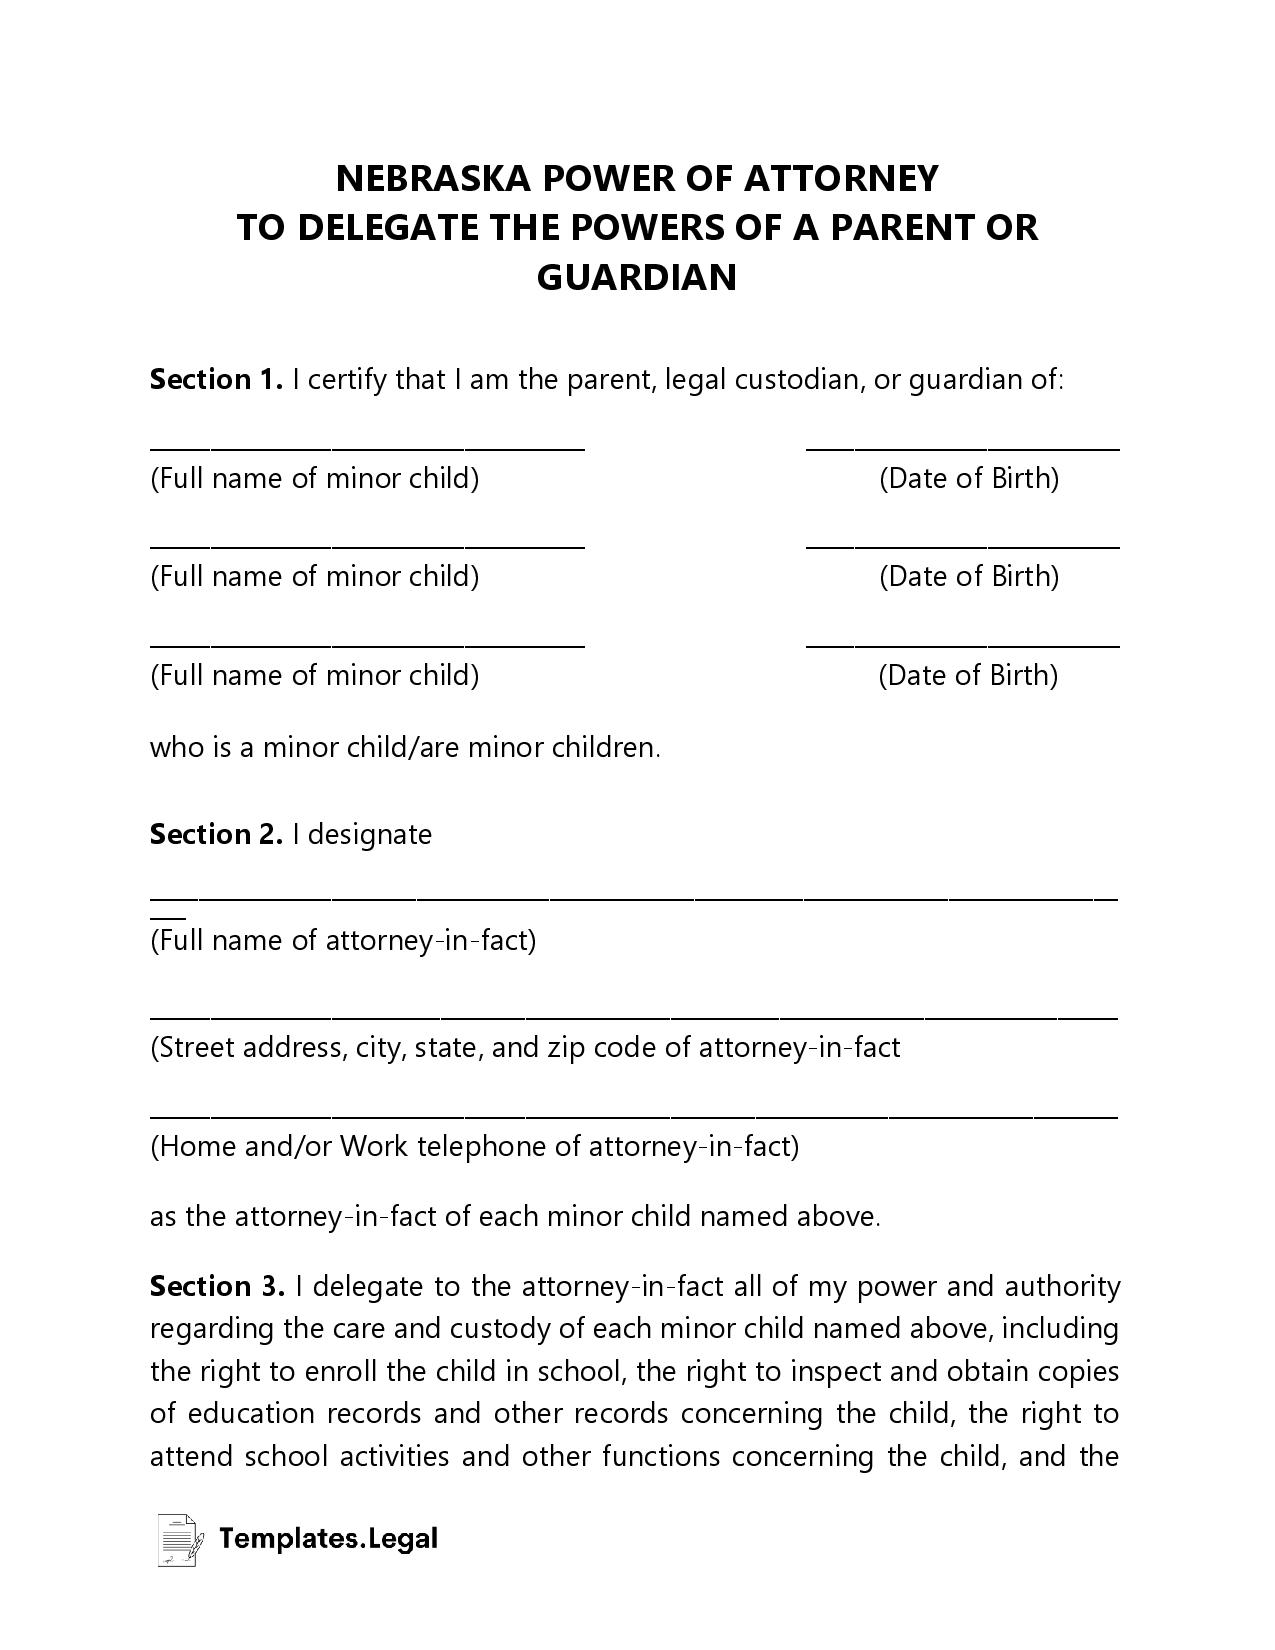 Nebraska Minor (Child) Power of Attorney - Templates.Legal